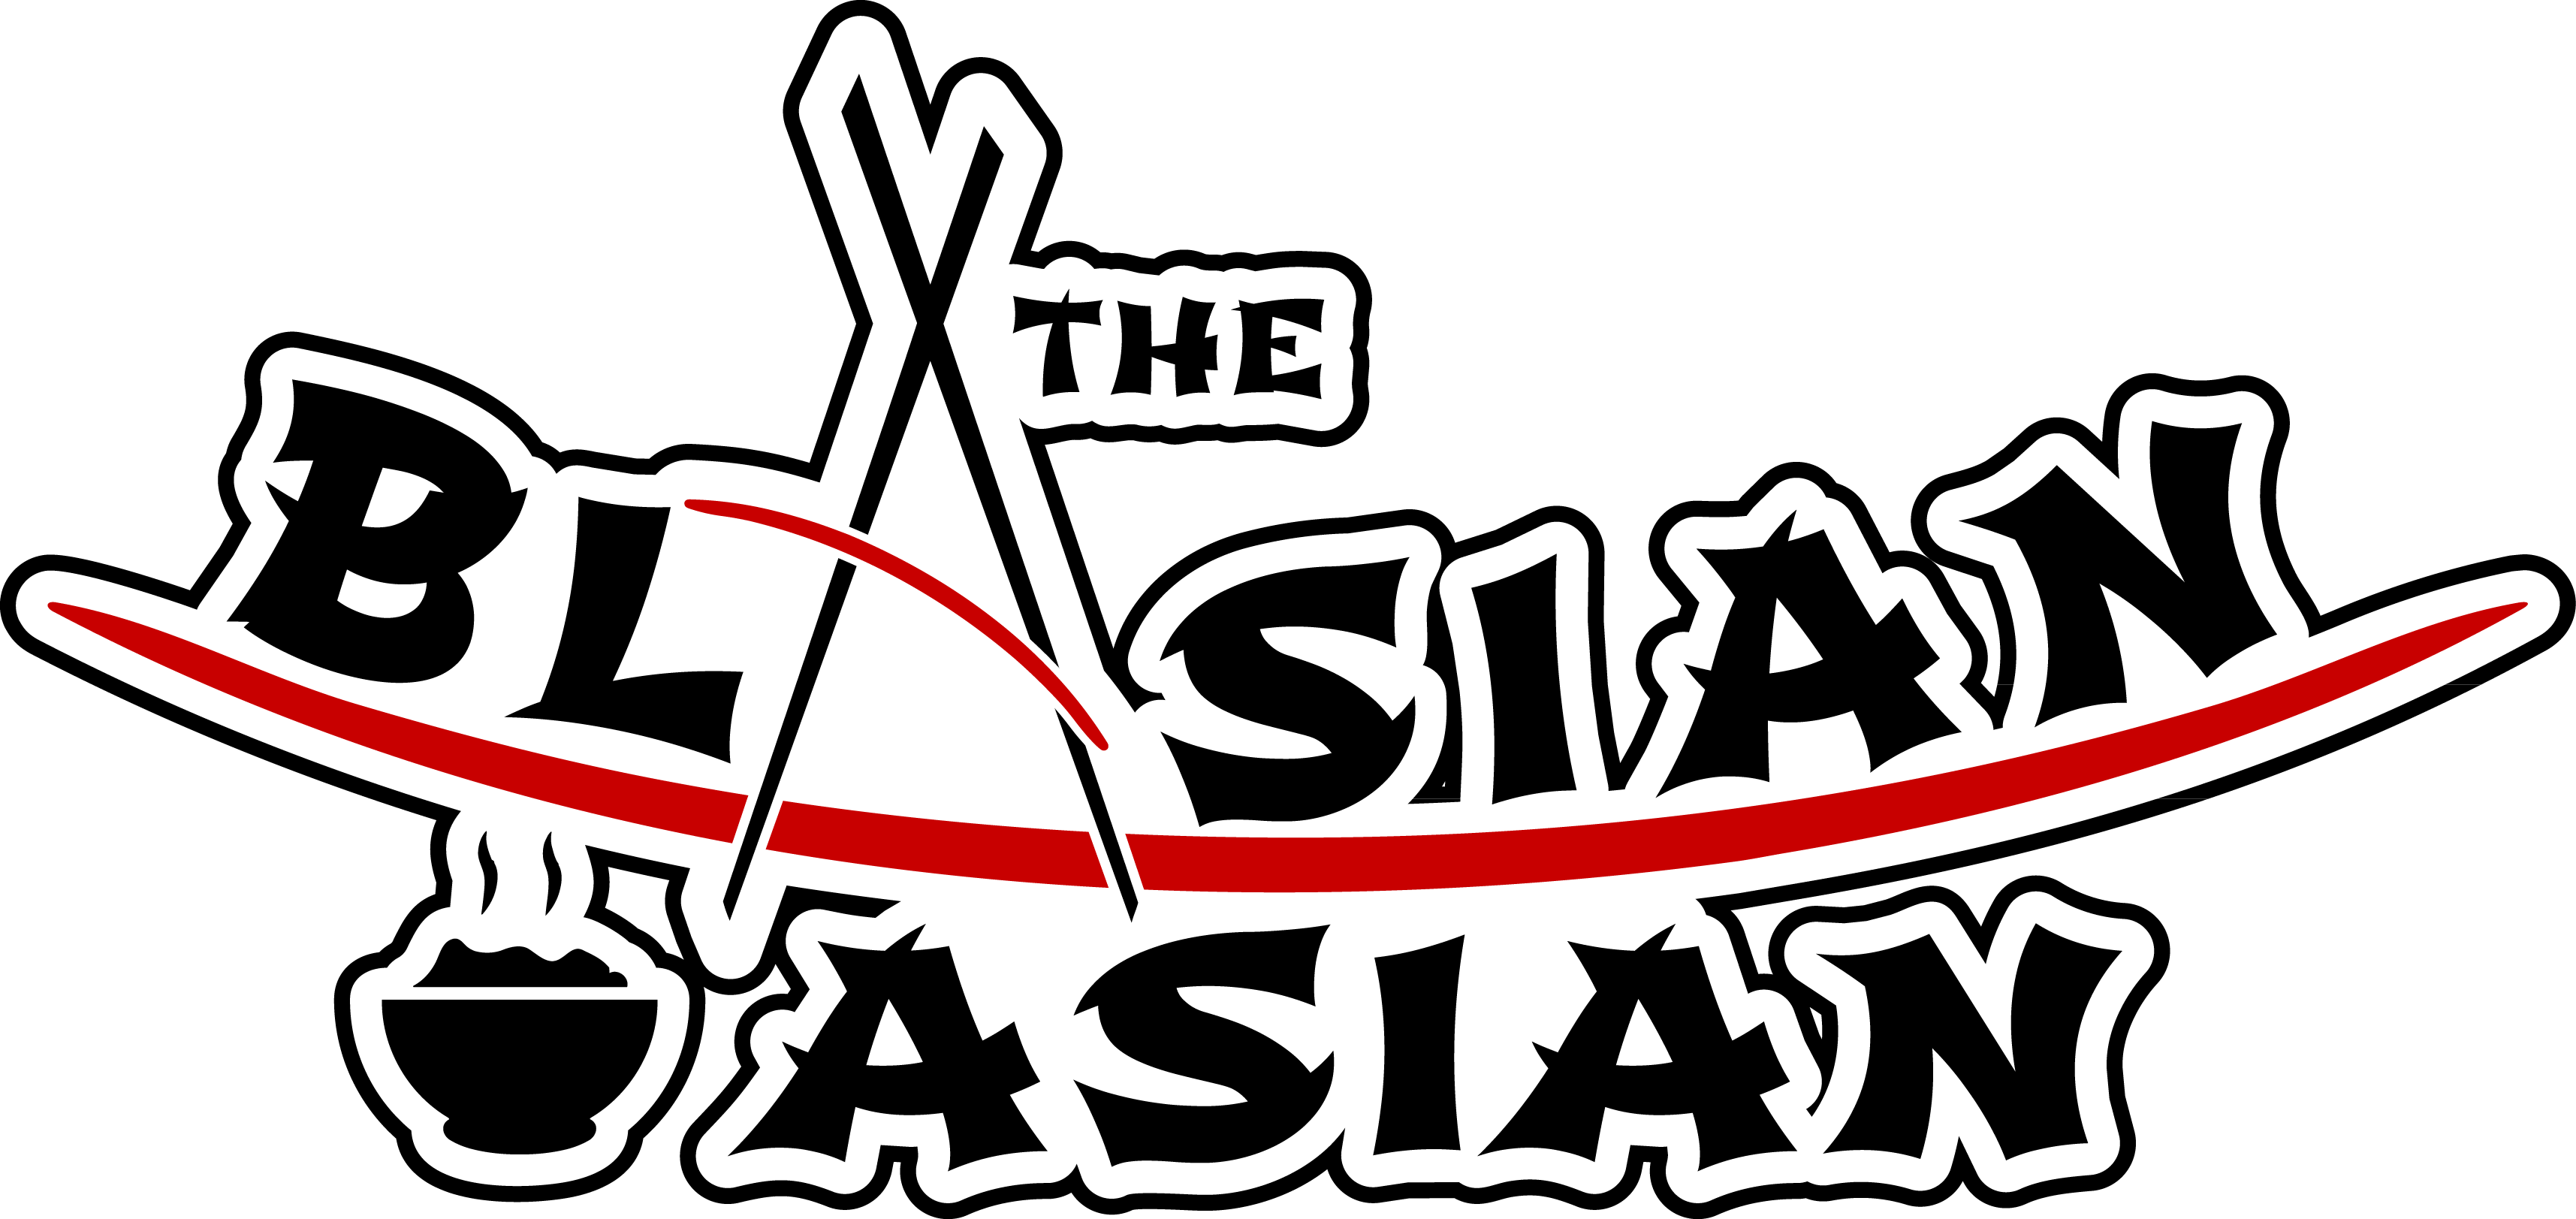 The Blasian Asian - The Blasian Asian (3430x1623)